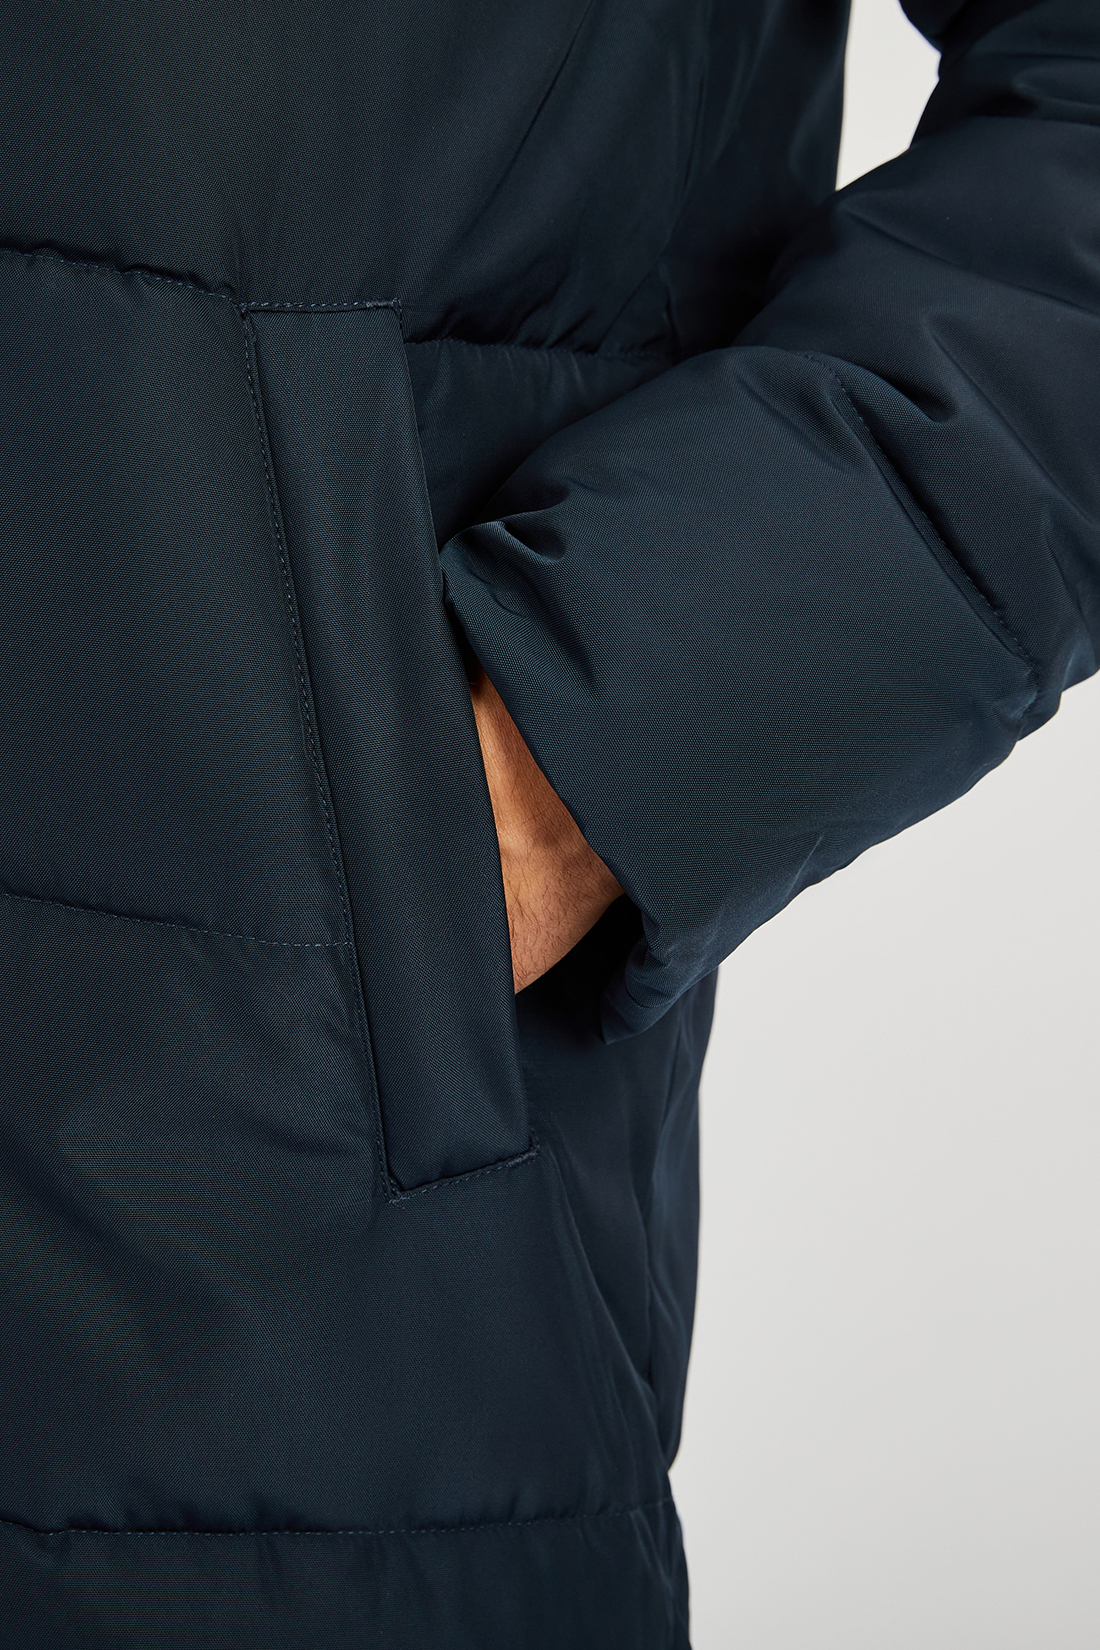 Длинная куртка (эко пух) (арт. baon B541506), размер M, цвет синий Длинная куртка (эко пух) (арт. baon B541506) - фото 3